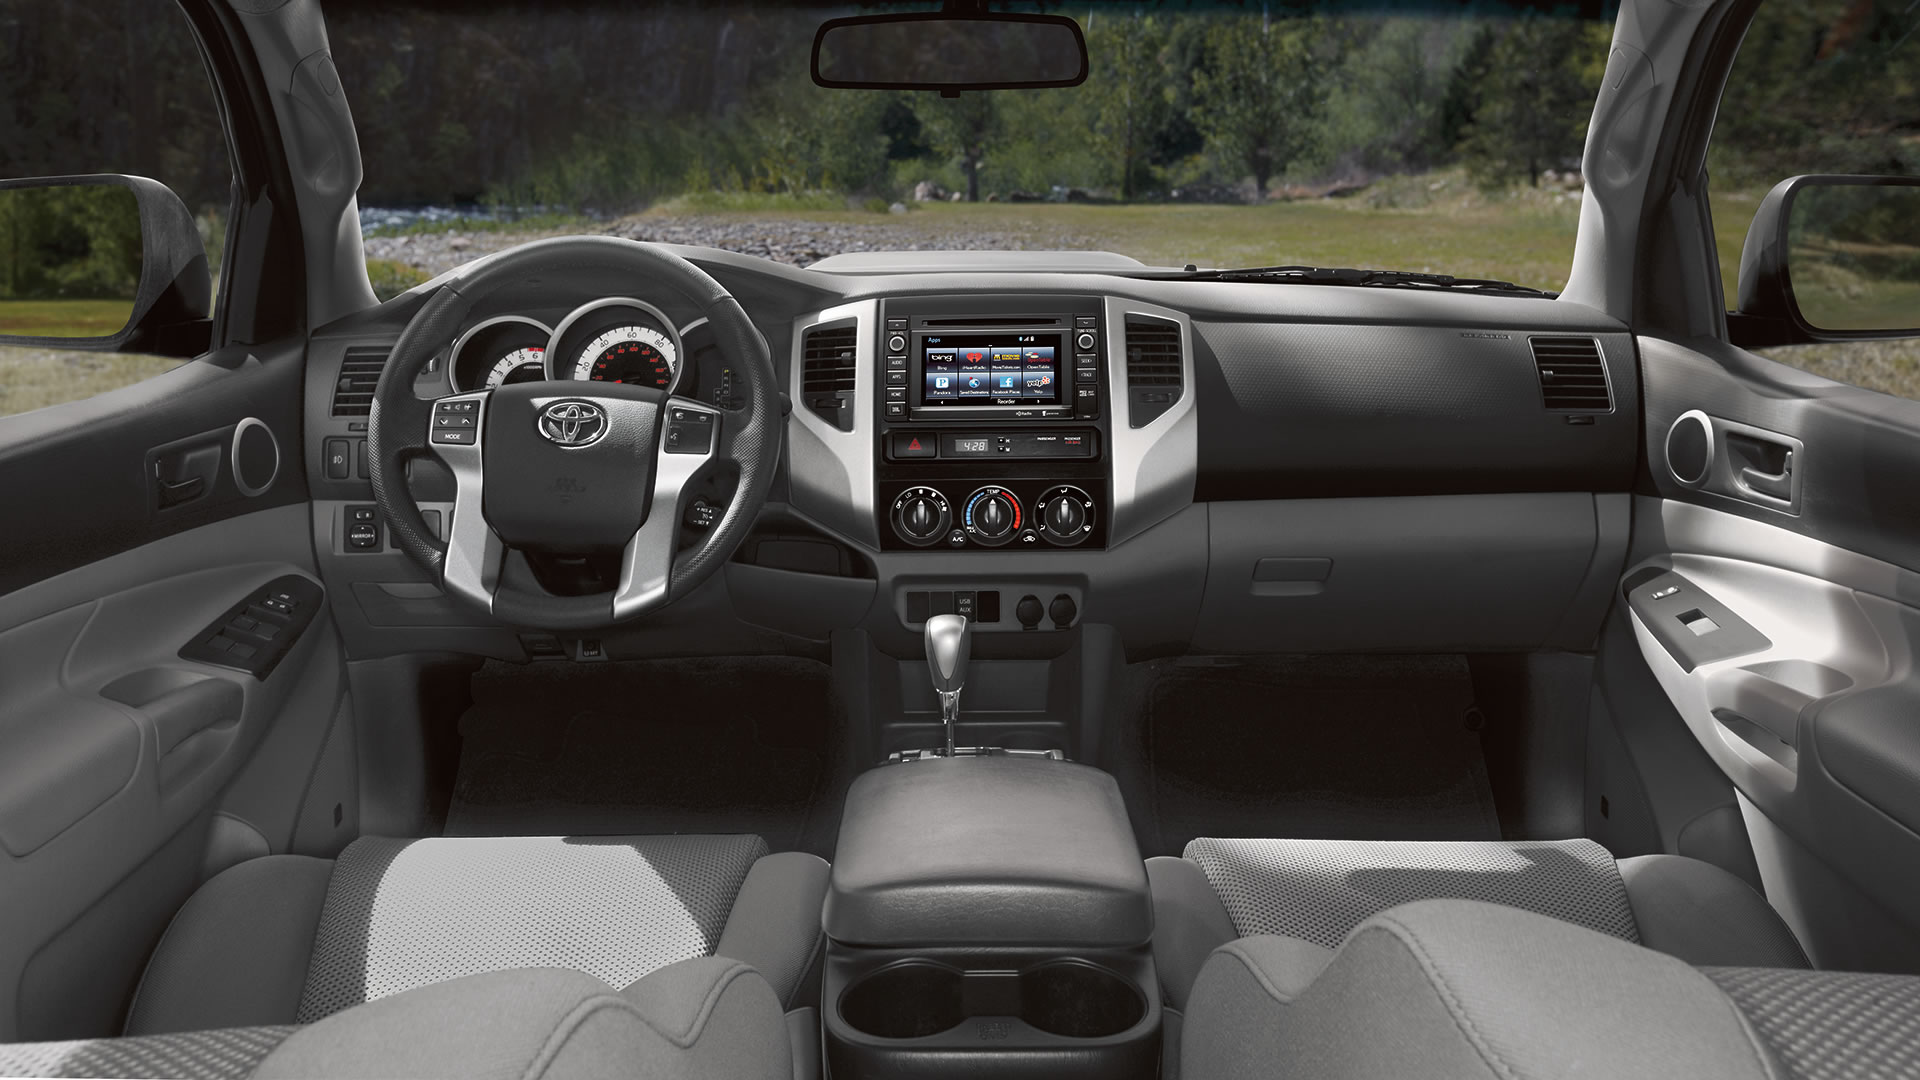 2012 Toyota Tacoma Service Manual Interior Rear Console